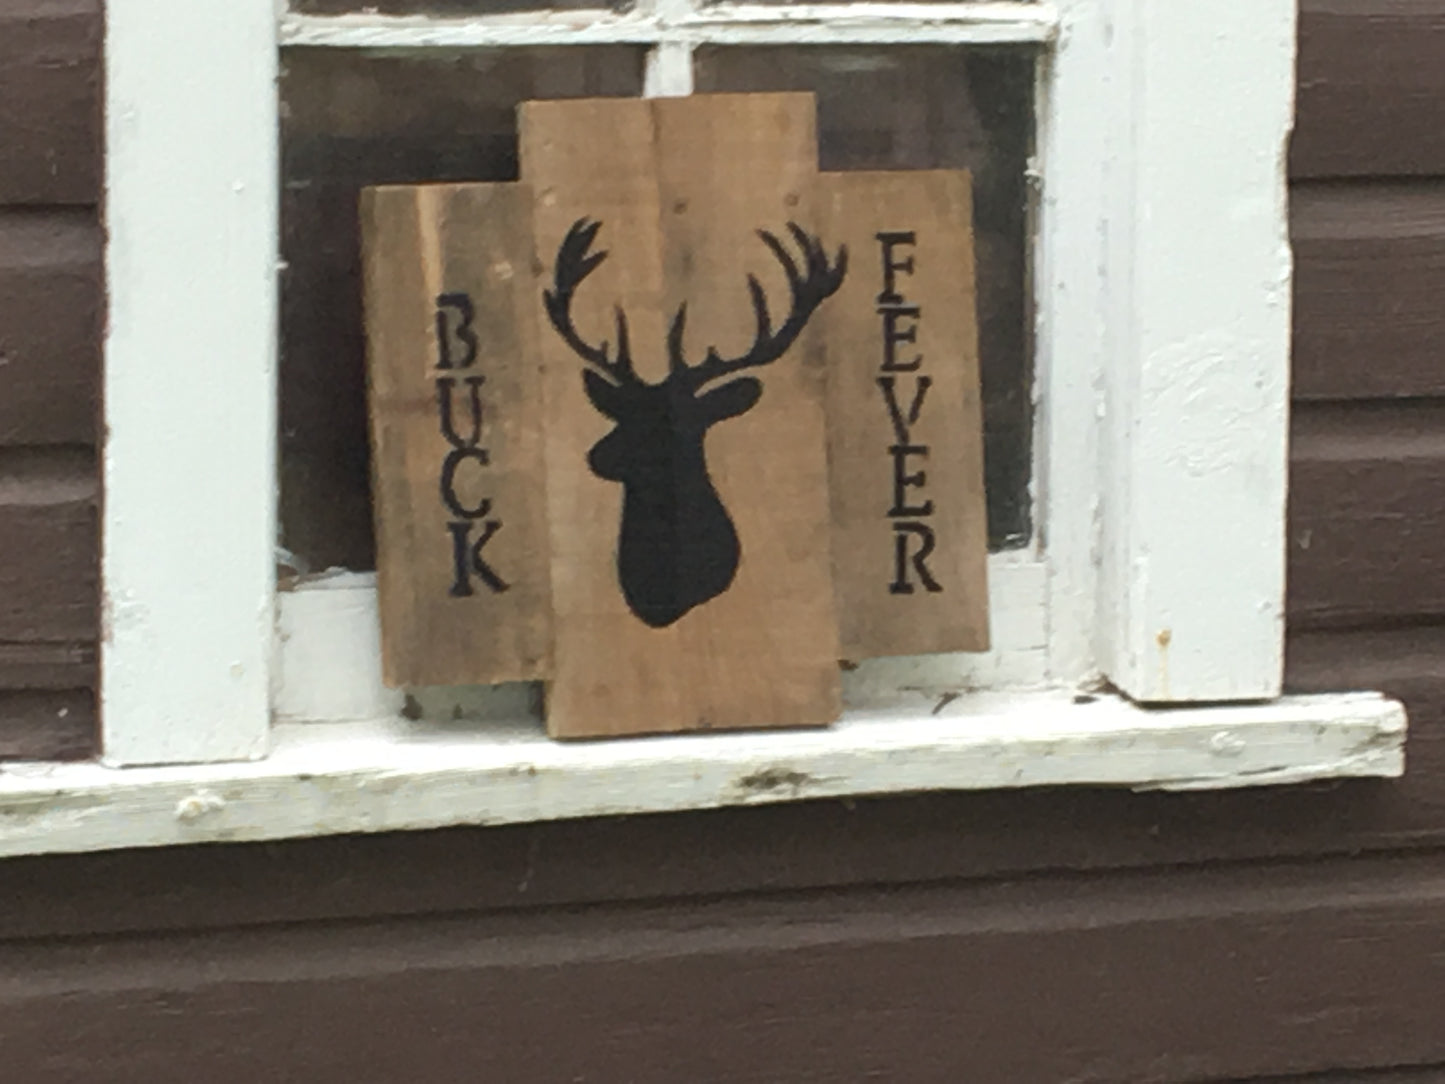 Buck Fever Pallet sign in window of barn